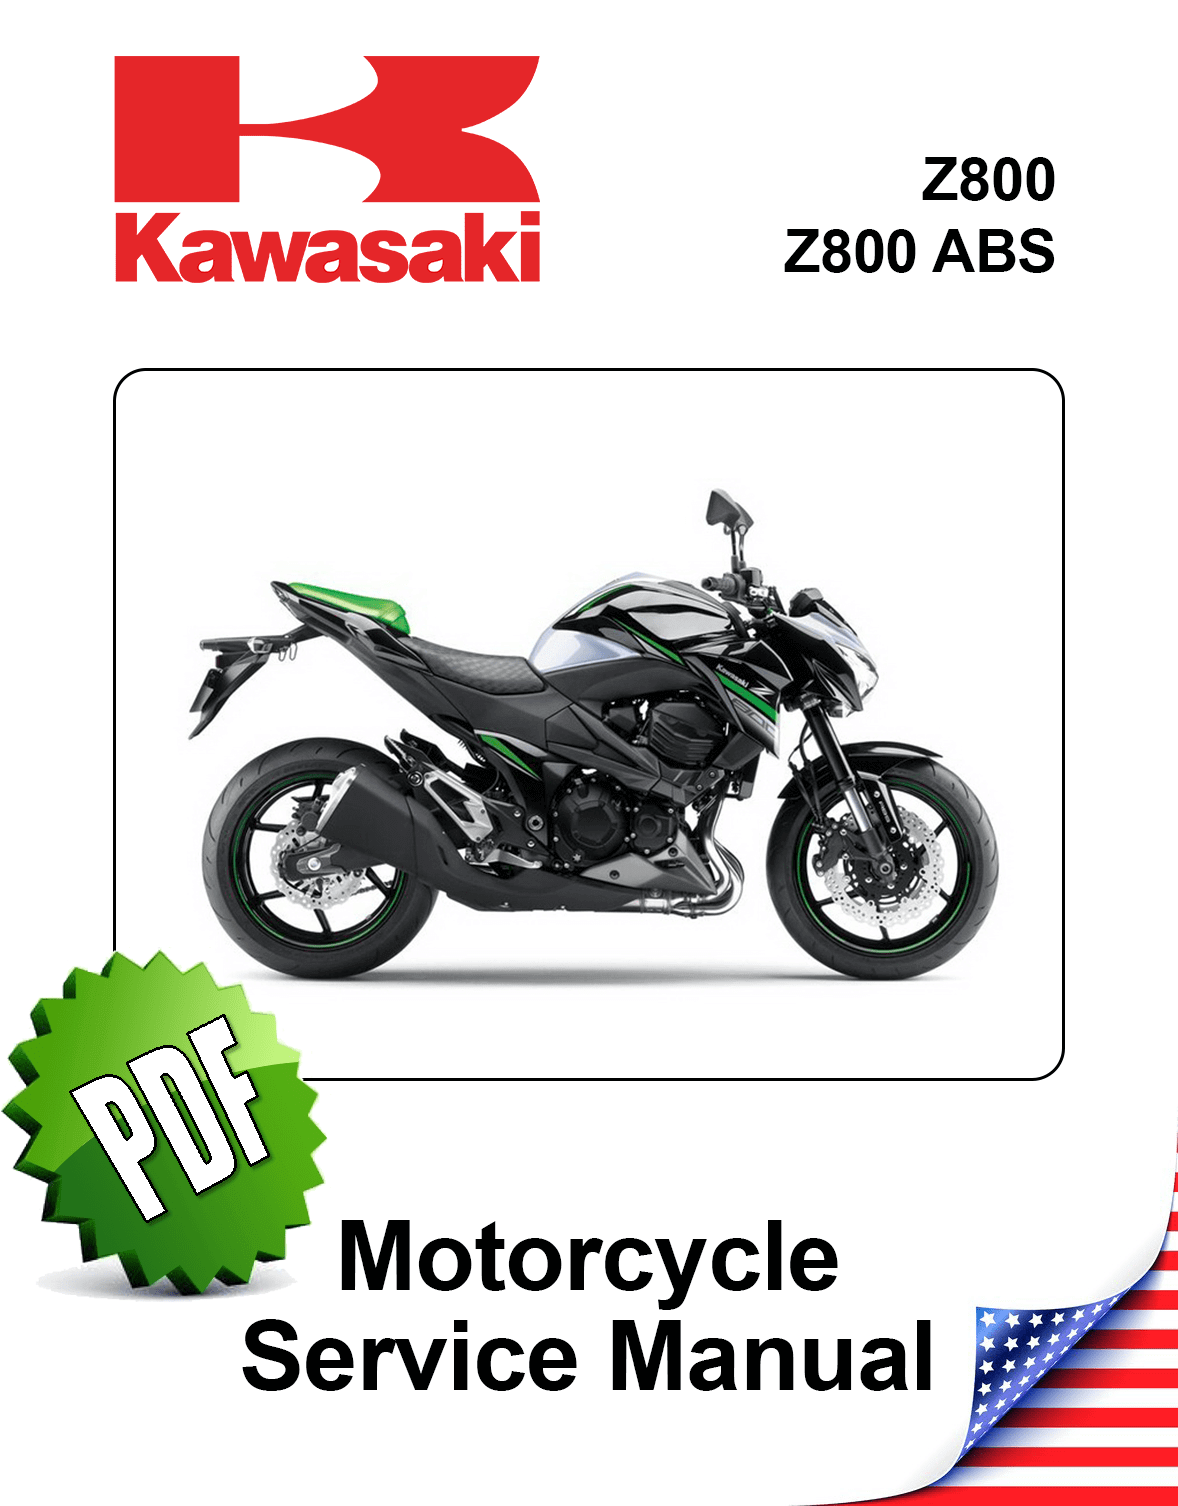 Kawasaki Z800 models 2013 to 2016 original motorcycle manufacturer's PDF repair manual download